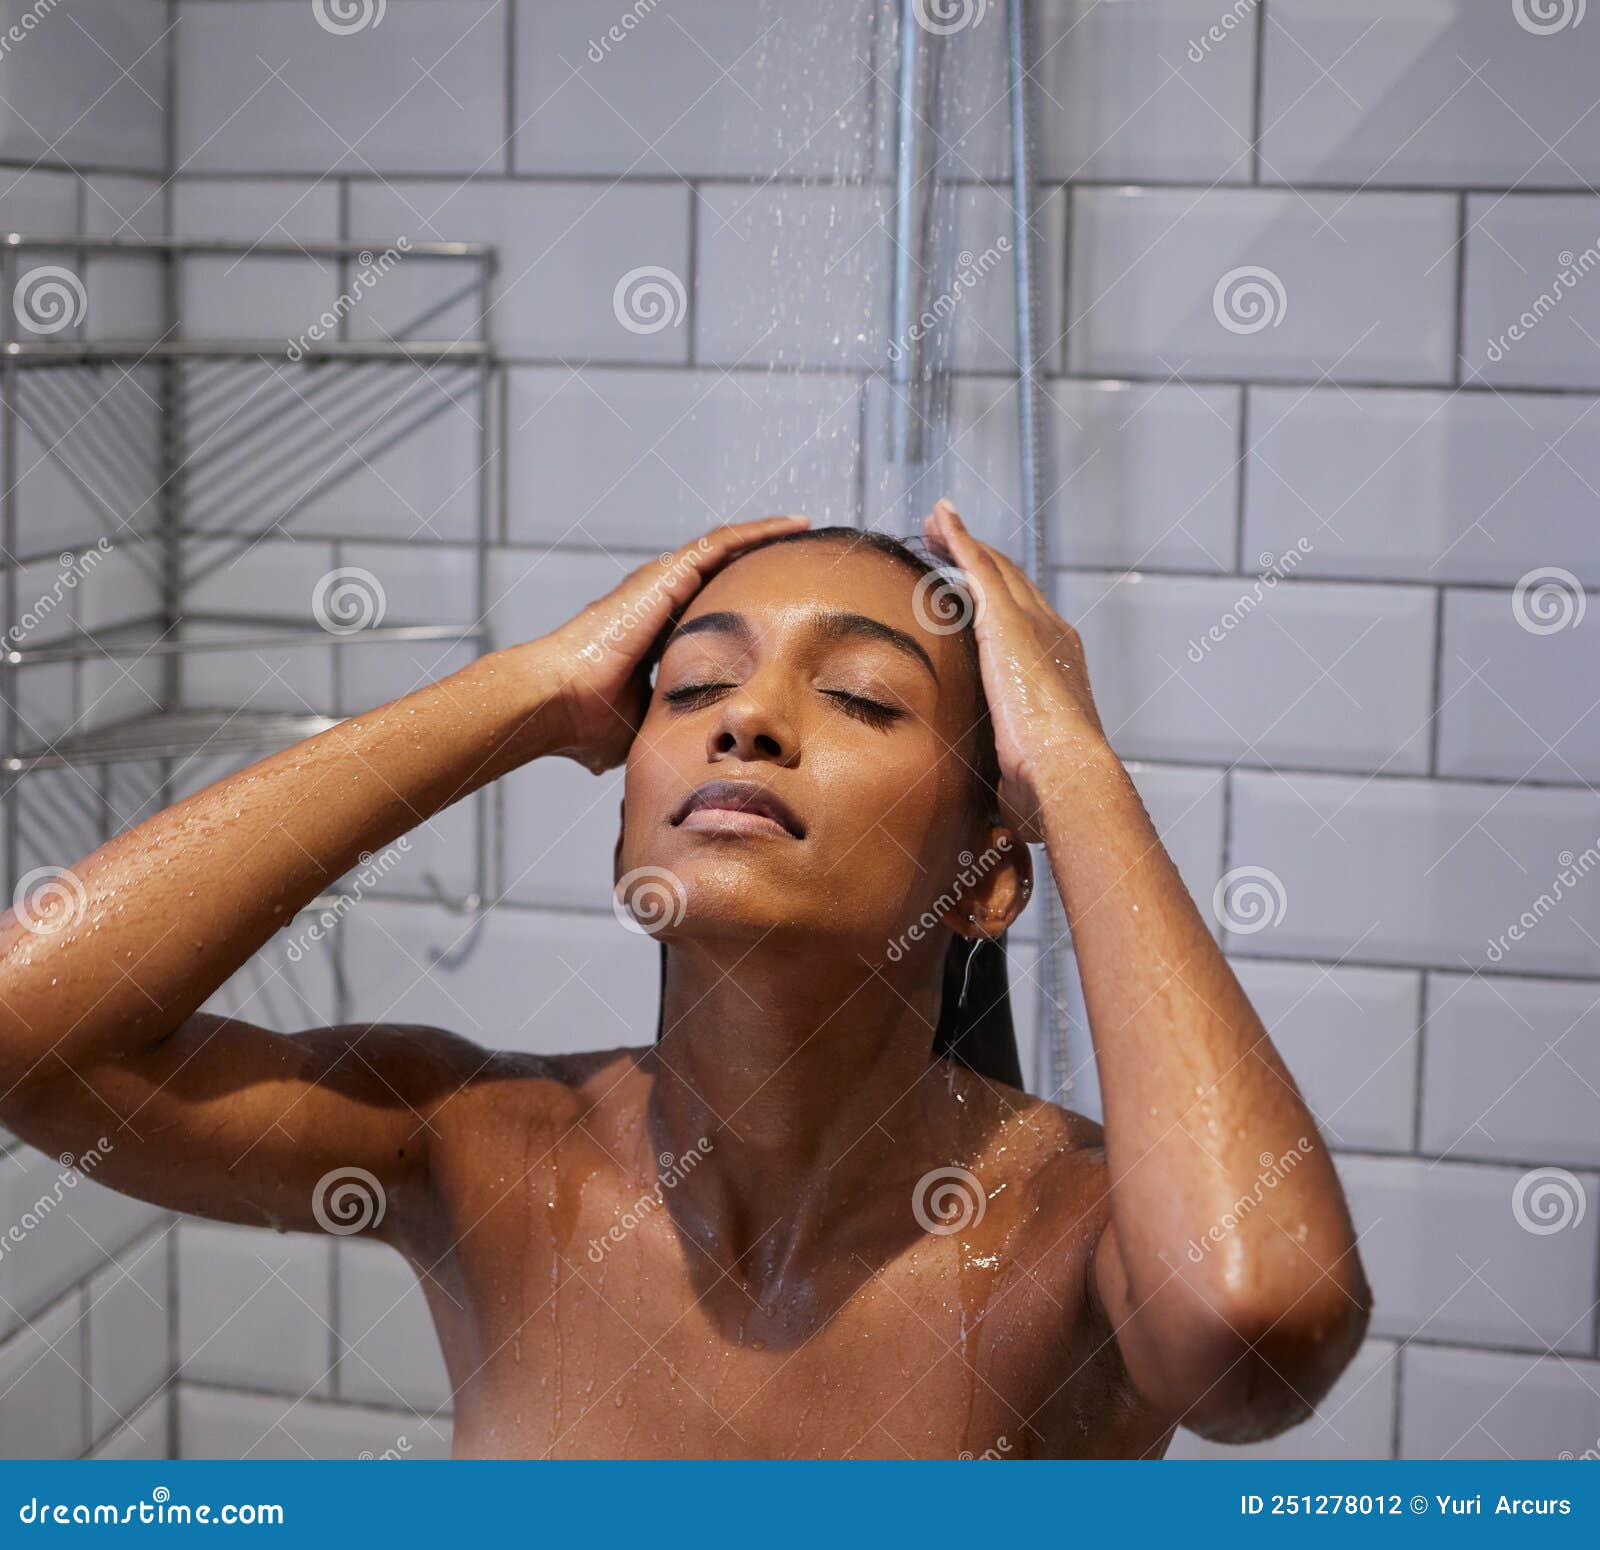 aliah mathews recommends Hot Women Taking Shower